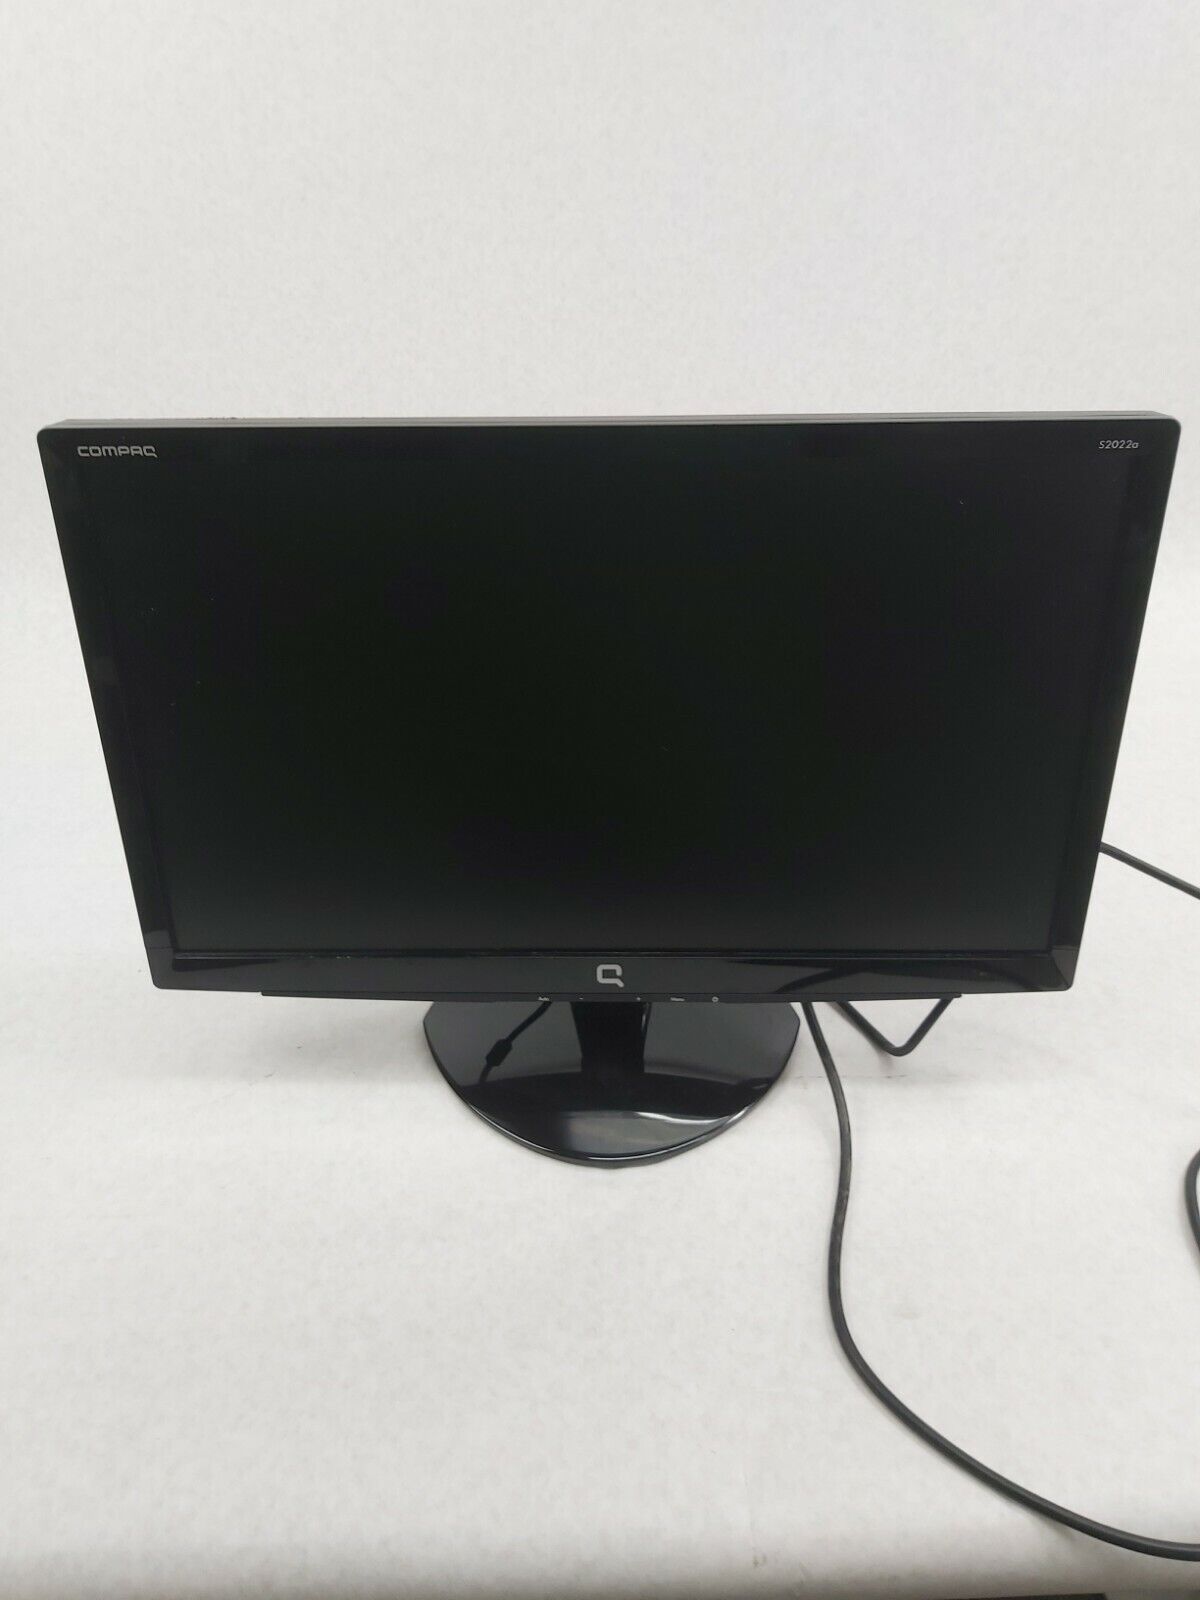 HP Compaq S2022a 20" LCD Monitor WM768A Grade C Pwr Cord Included